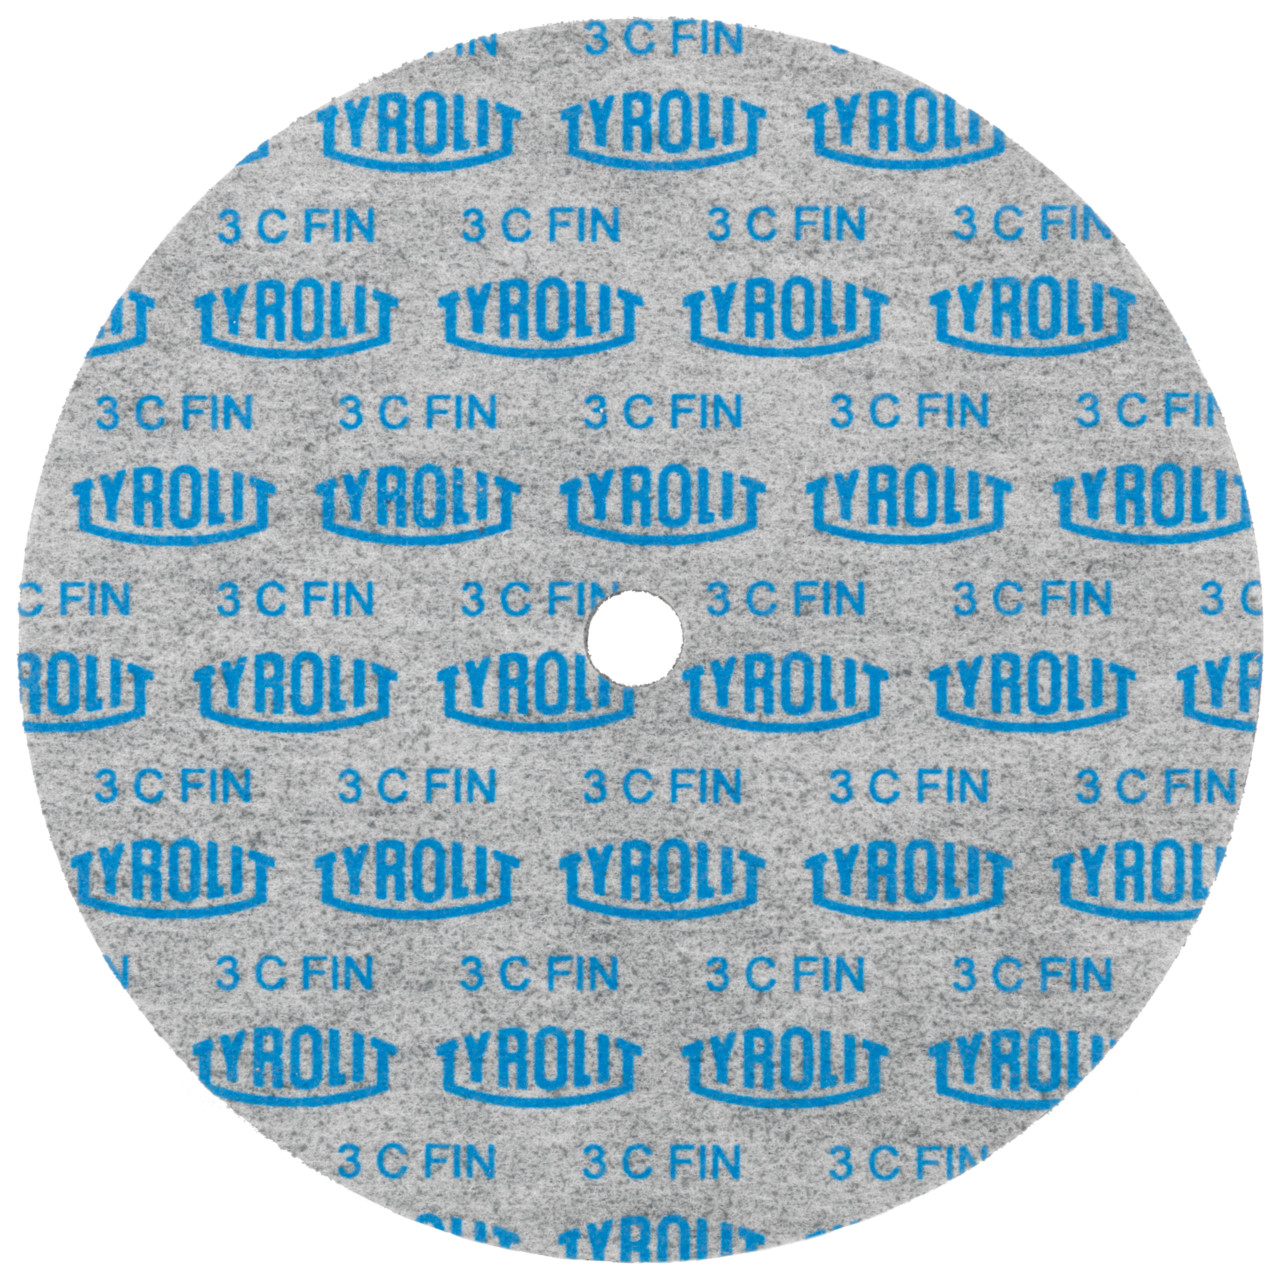 Tyrolit Discos compactos prensados DxDxH 152x13x12,7 Inserto universal, 3 C FEIN, forma: 1, Art. 34190292